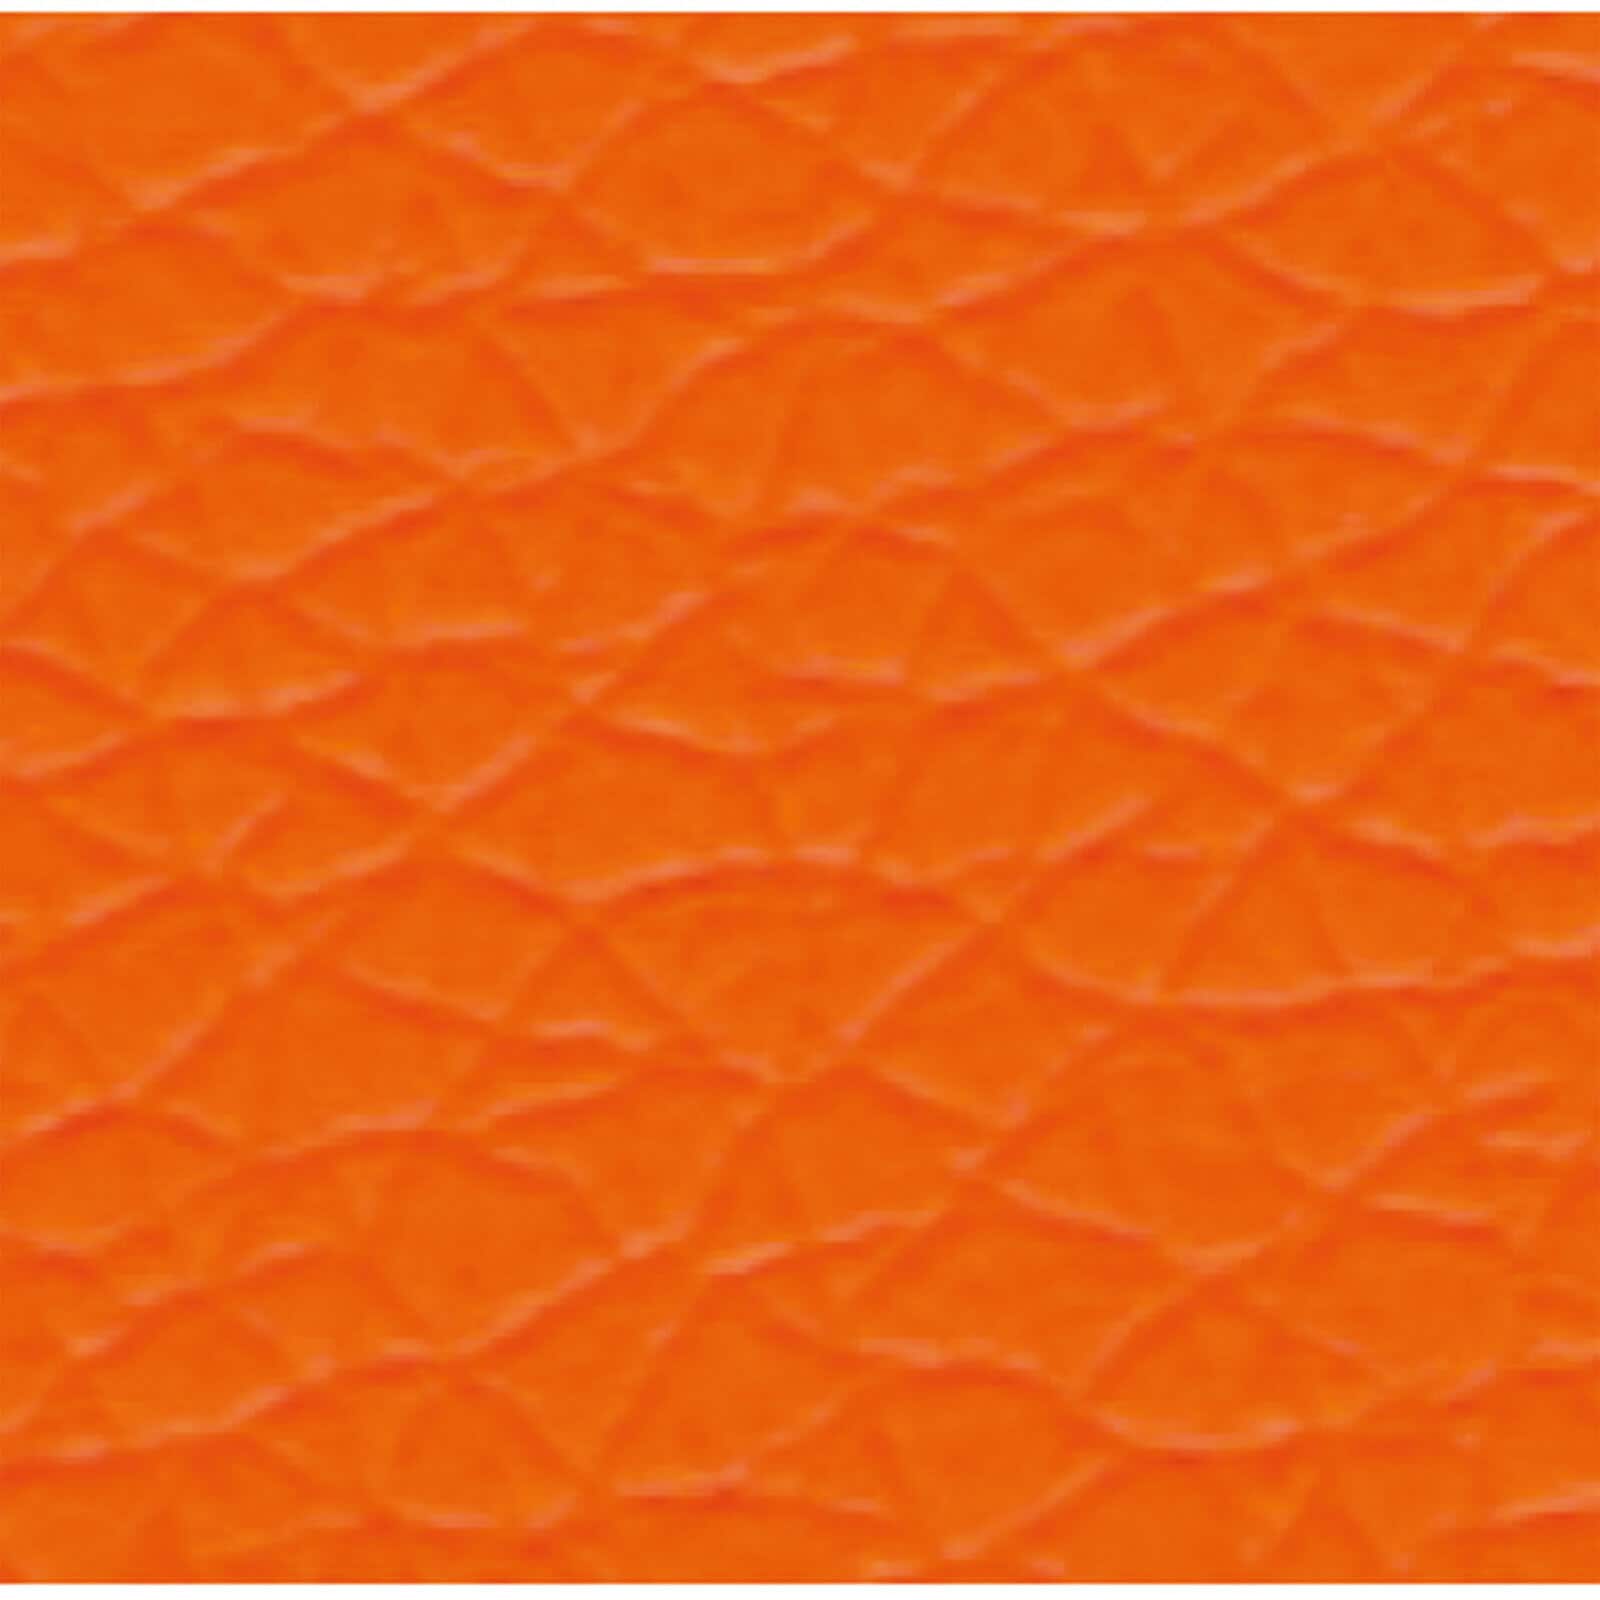 MONDO Esszimmerstuhl AMATI ST 3 F Lederlook orange